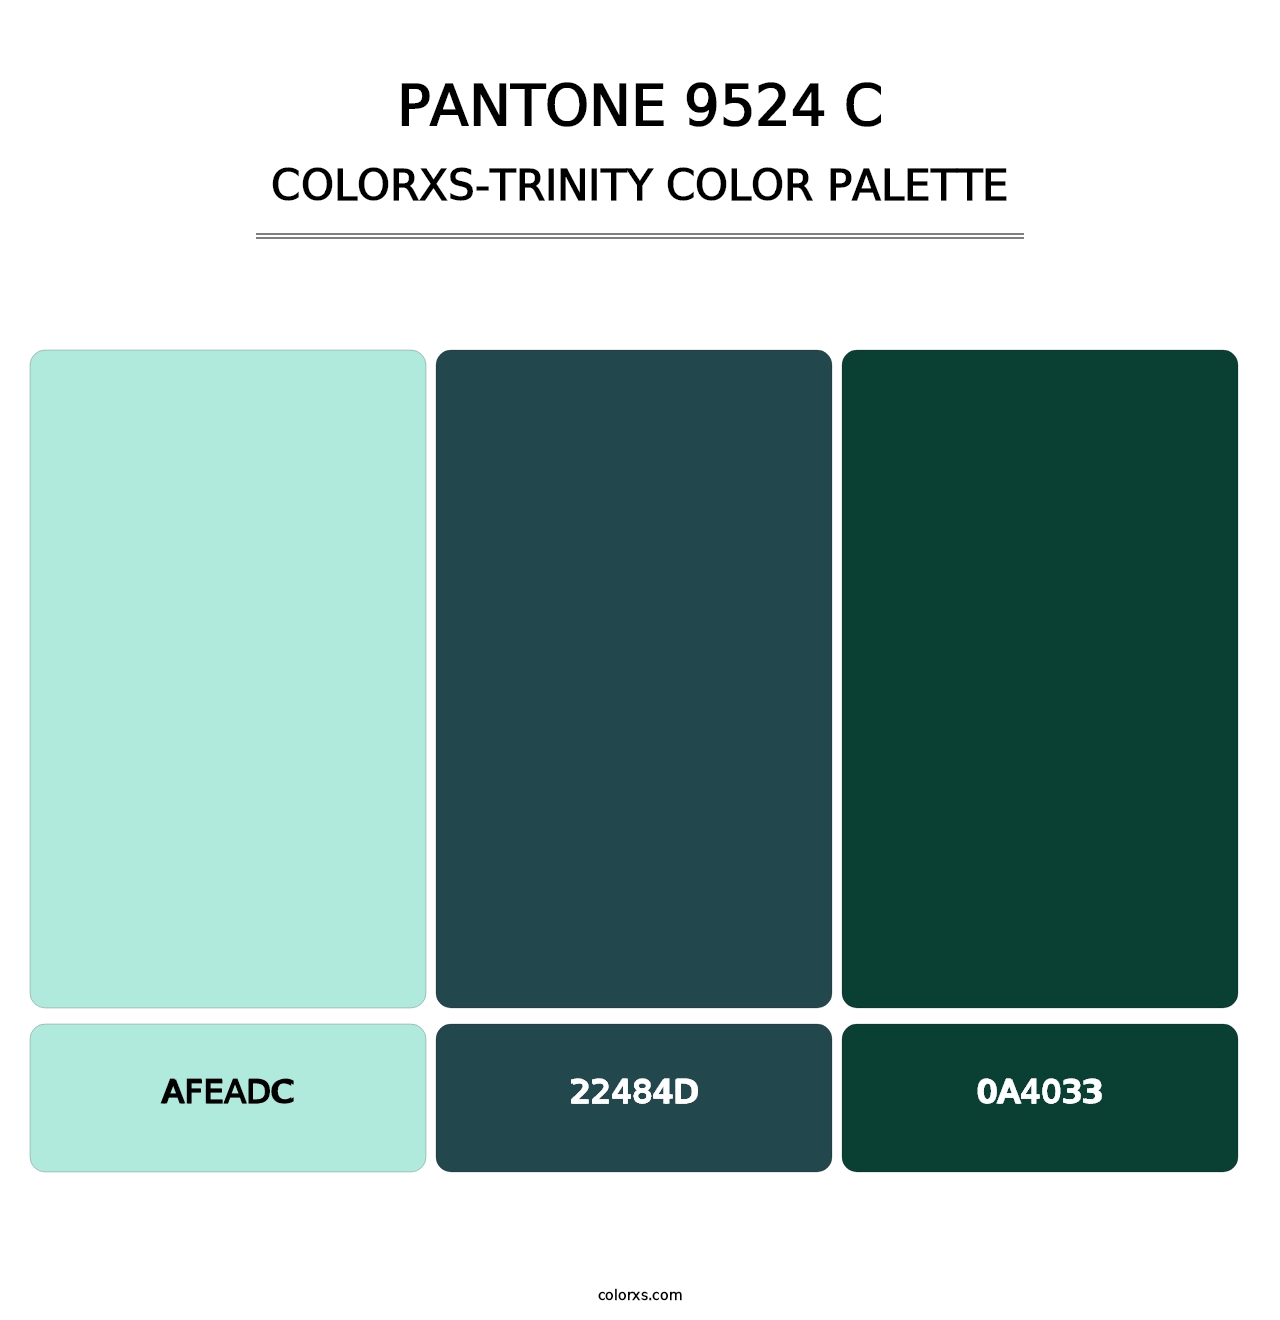 PANTONE 9524 C - Colorxs Trinity Palette